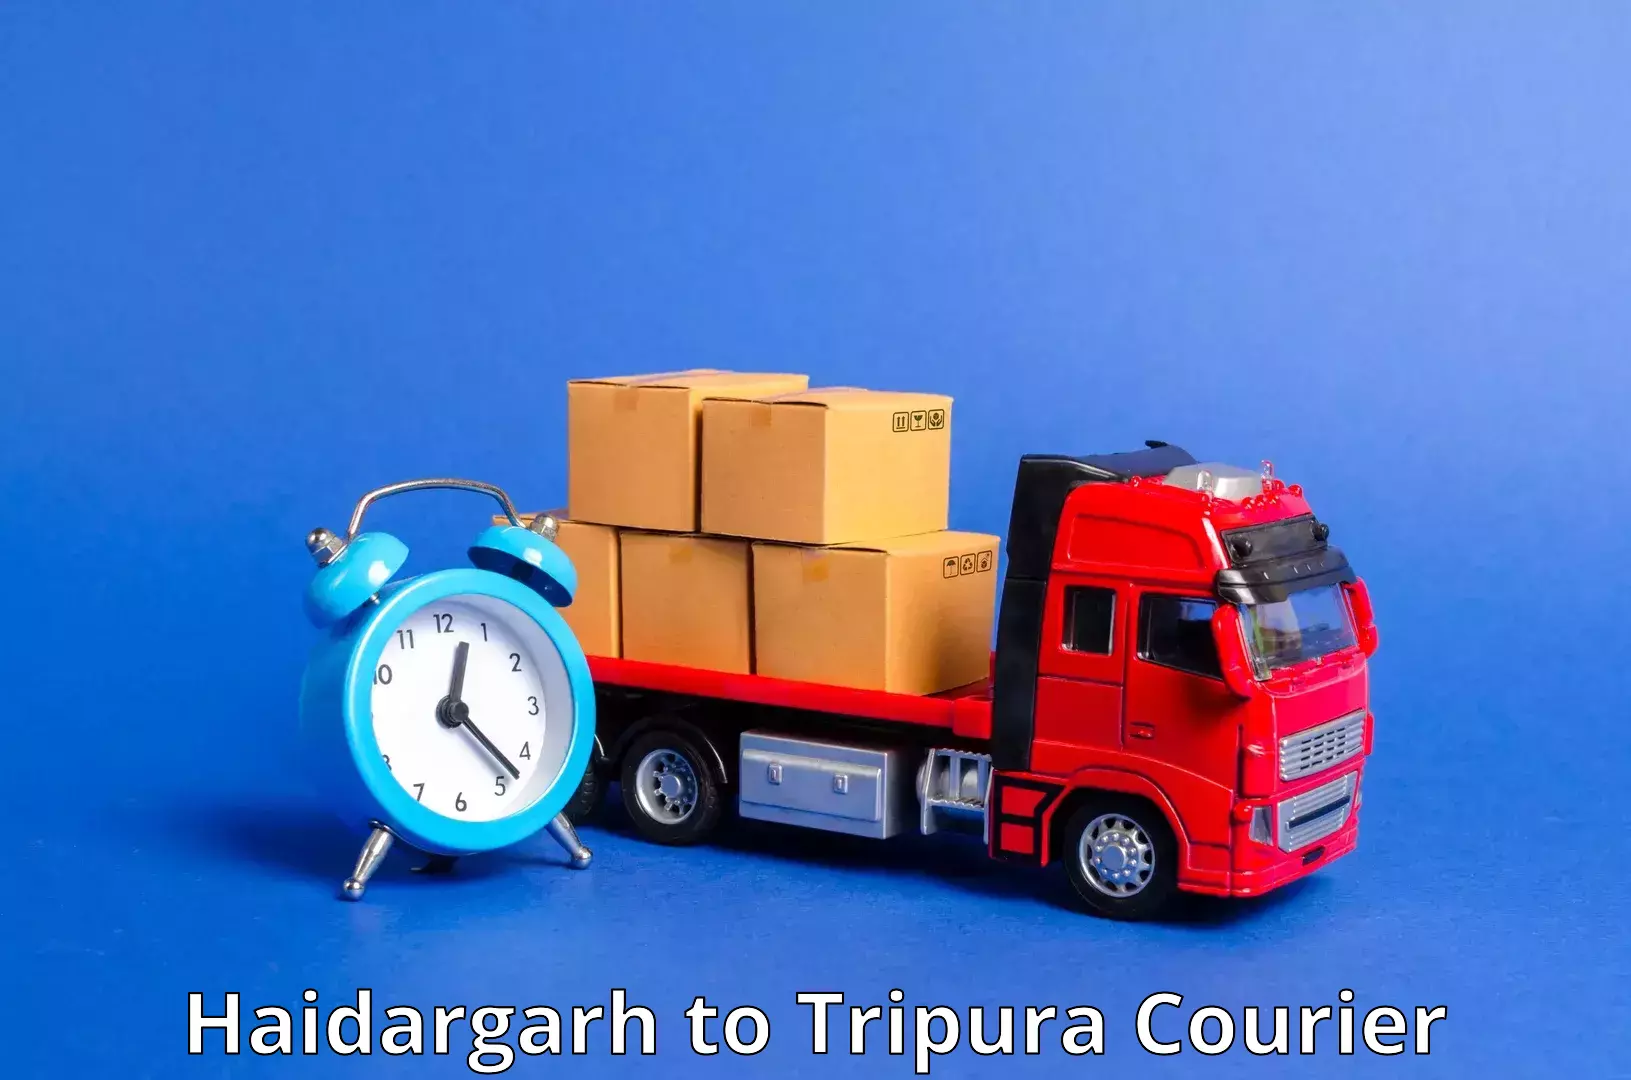 Multi-national courier services Haidargarh to Manu Bazar